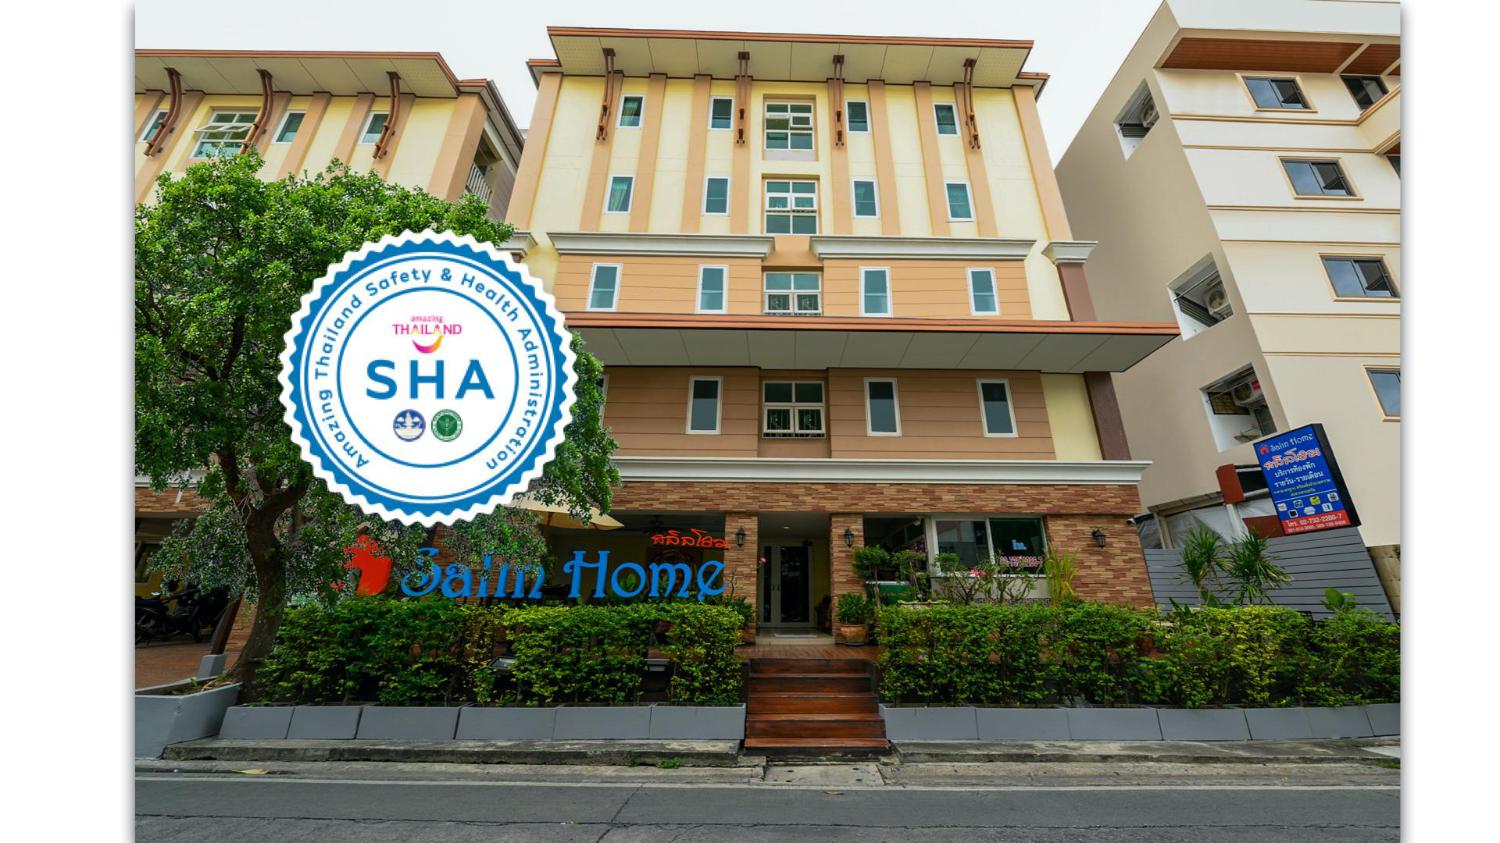 Salin Home Hotel Ramkhamhaeng - Image 0